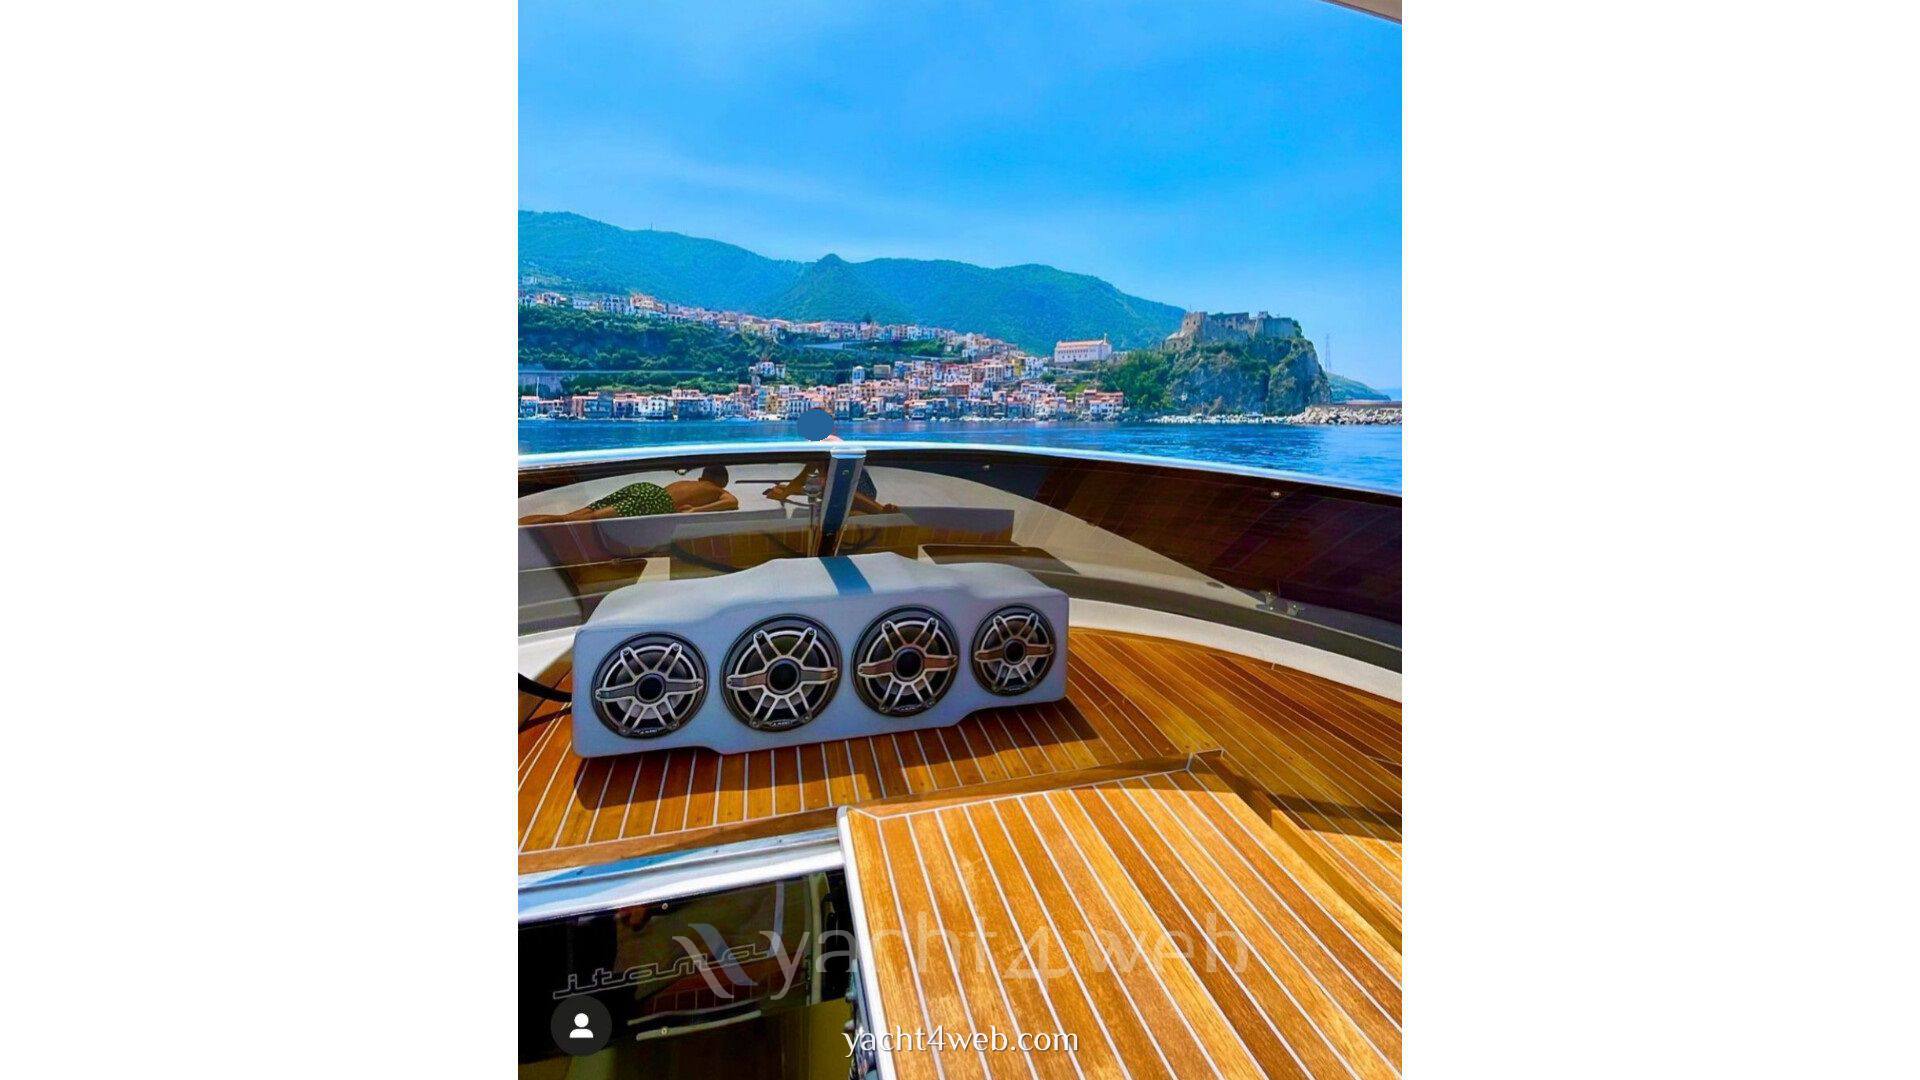 Itama 54 Motor yacht